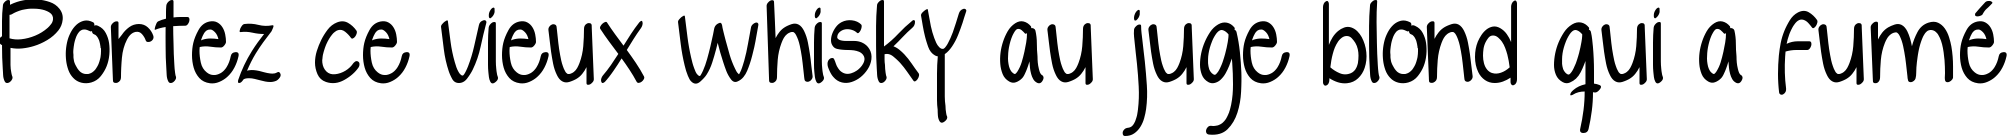 Пример написания шрифтом yelly текста на французском